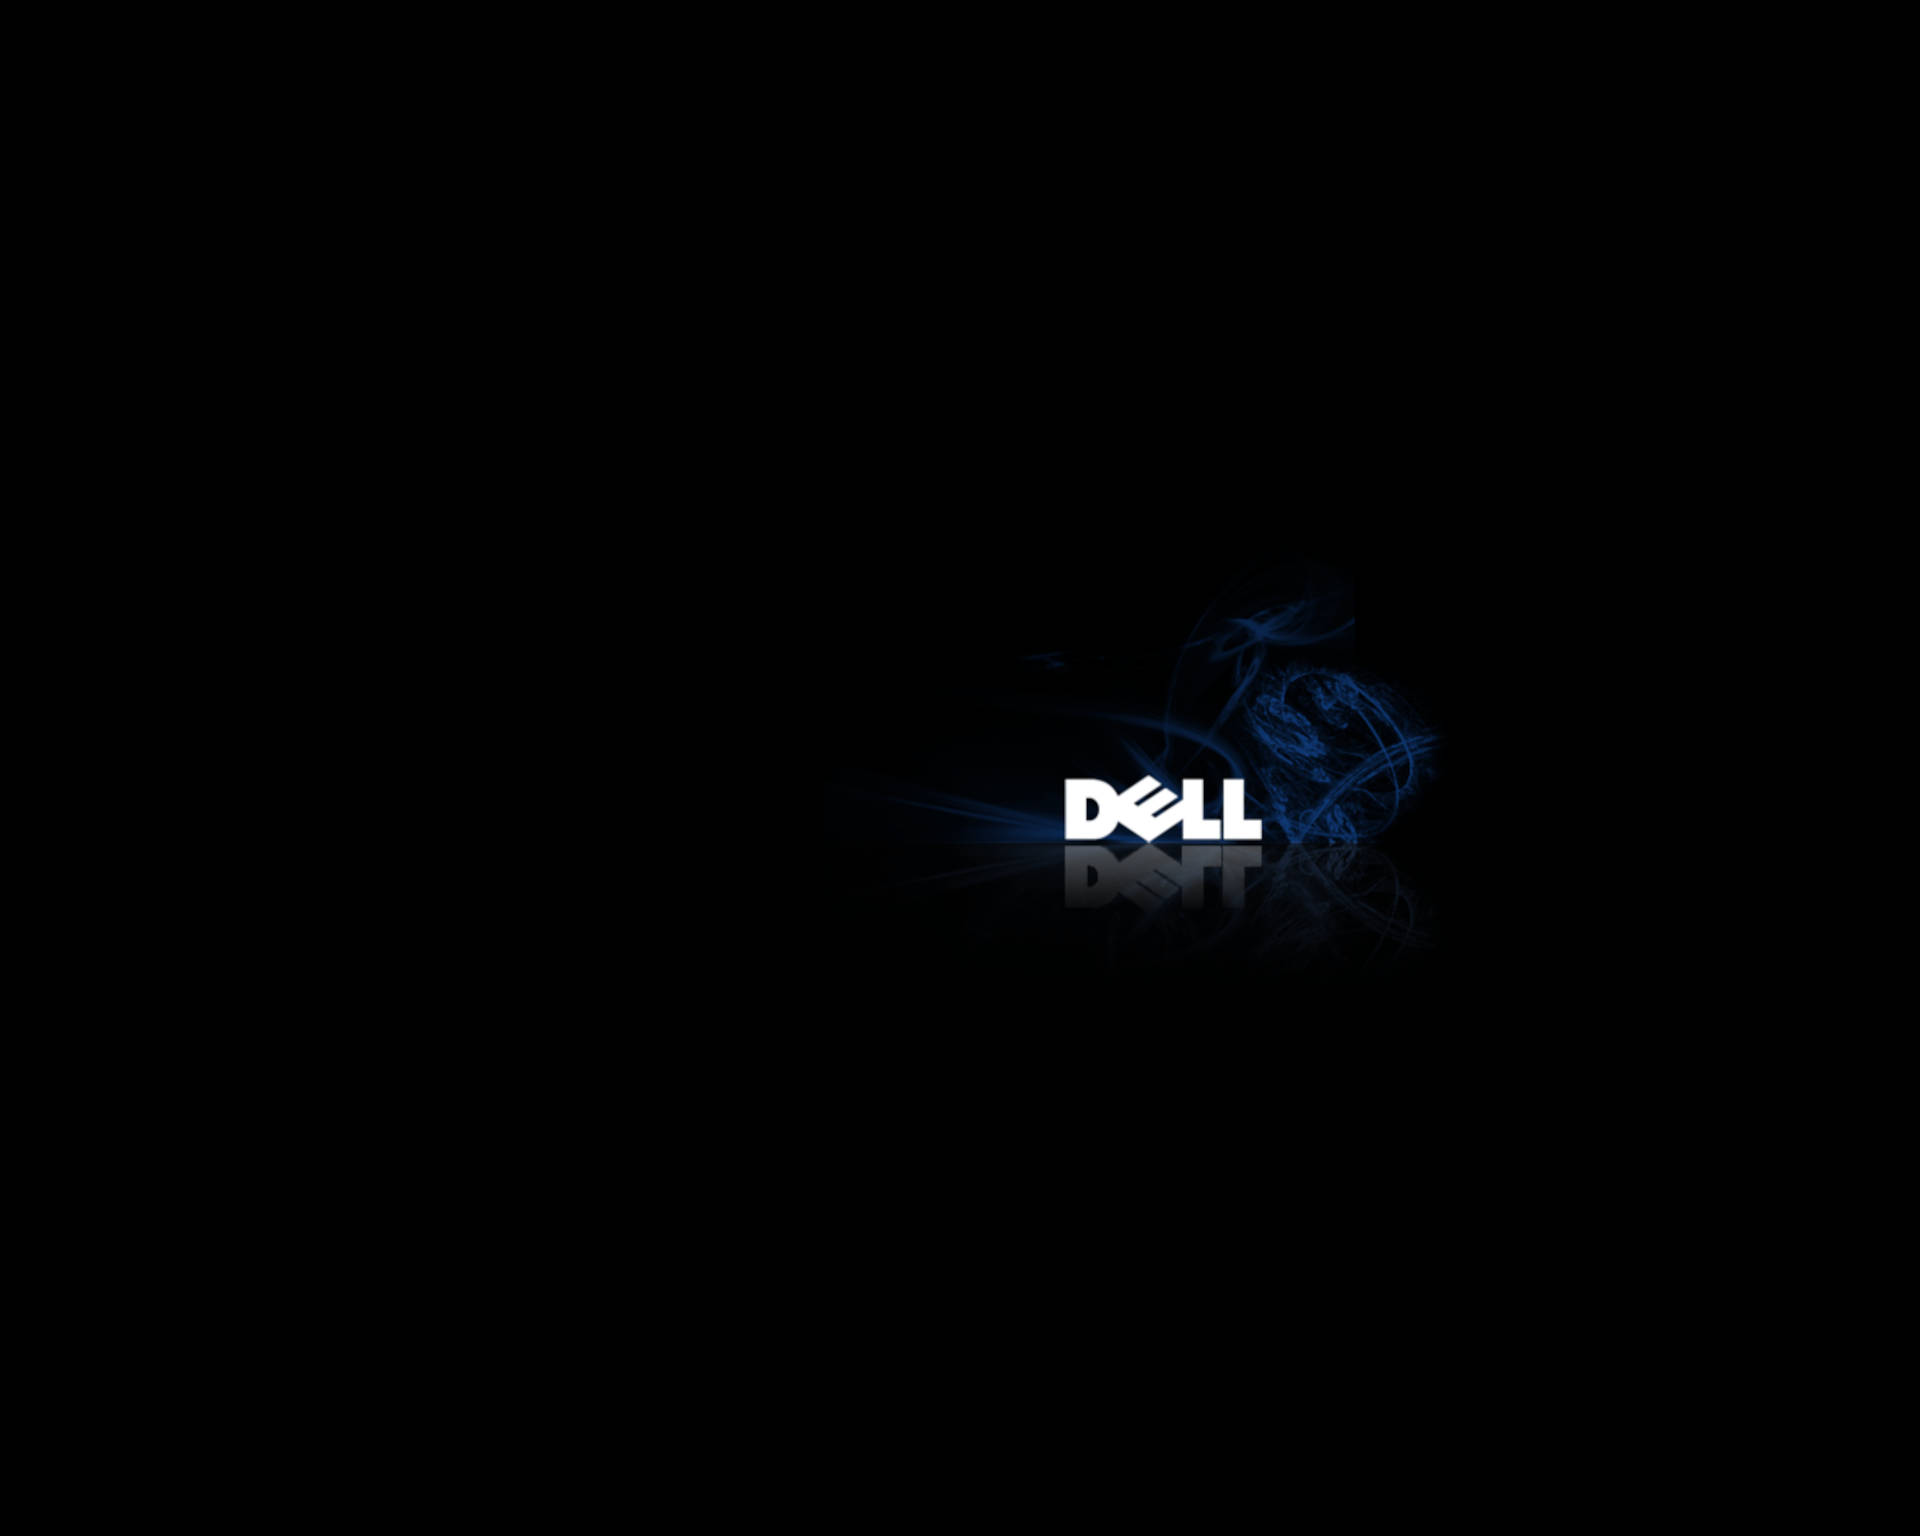 Dell 4k Logo With Smoke Wallpaper